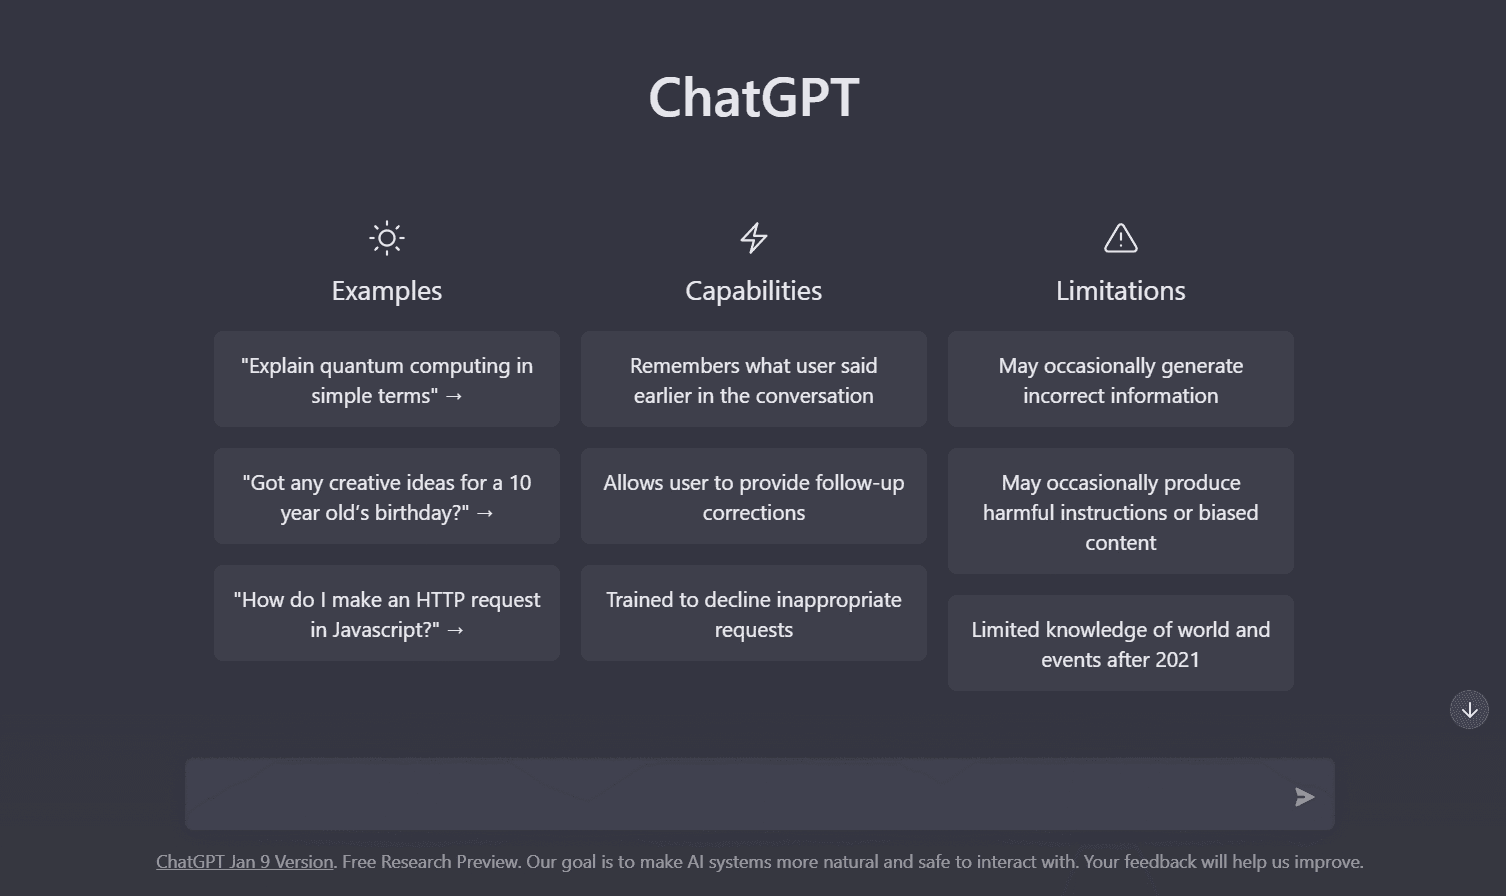 OpenAI's ChatGPT UI (January 9th Version)